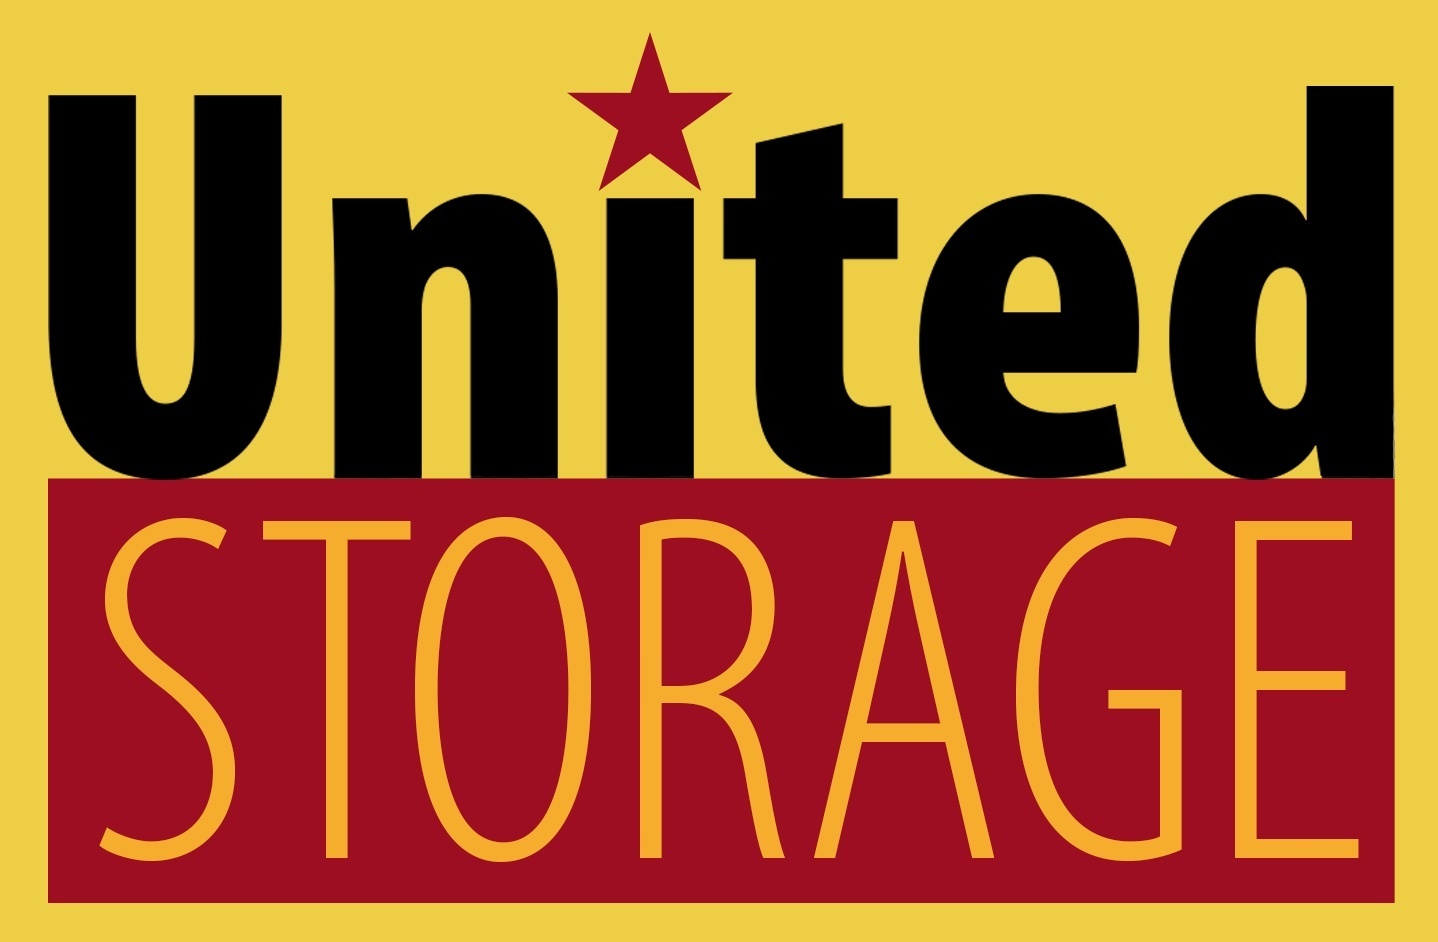 United Storage